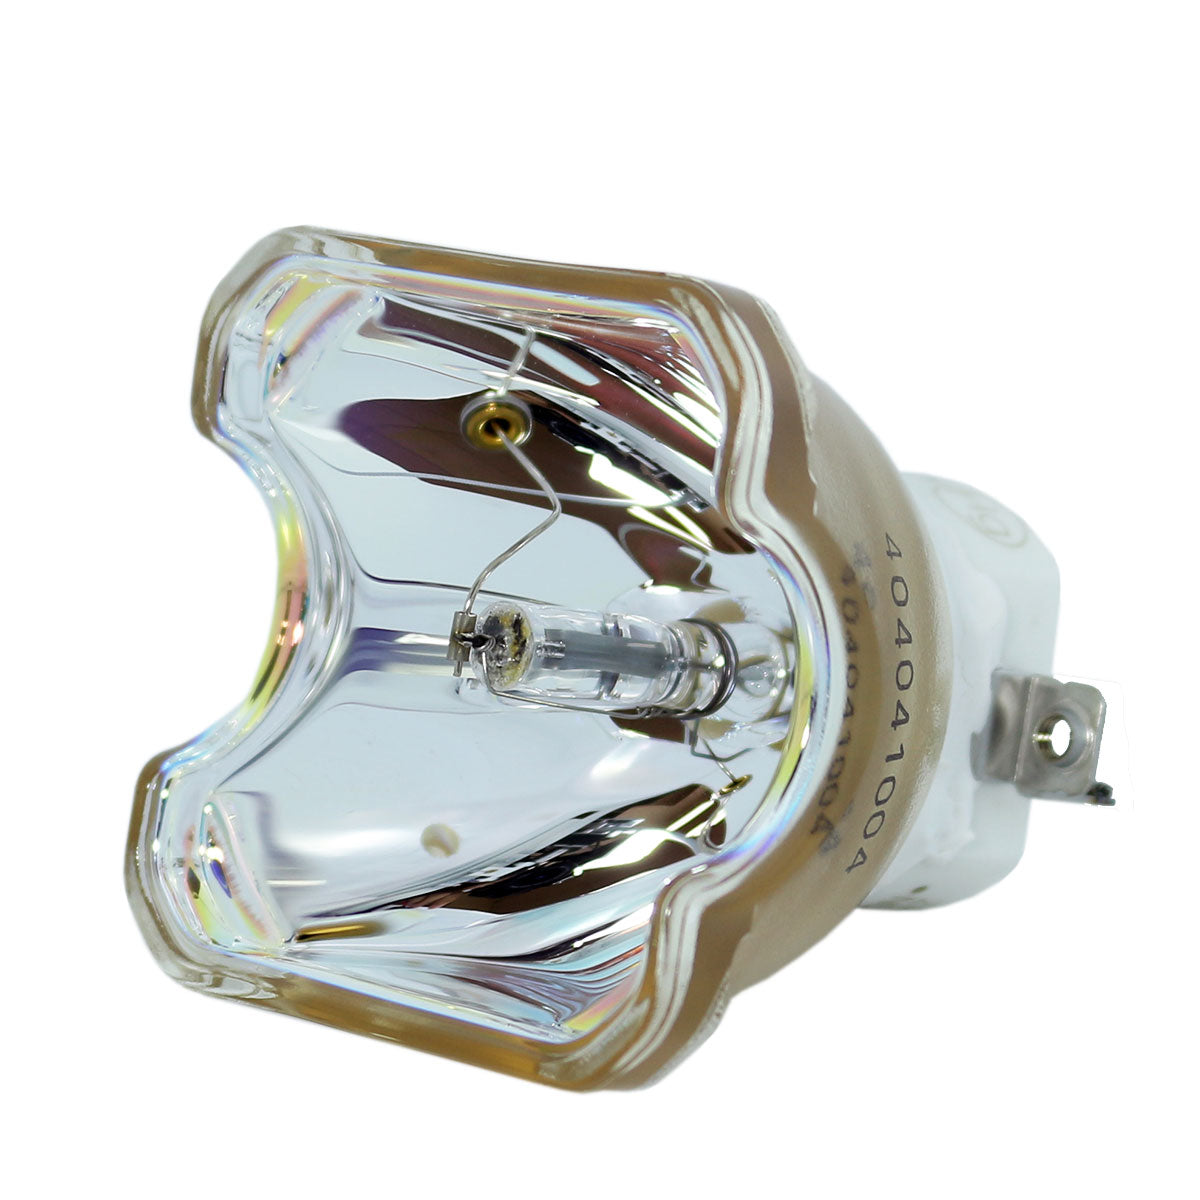 Hitachi DT00841 Ushio Projector Bare Lamp